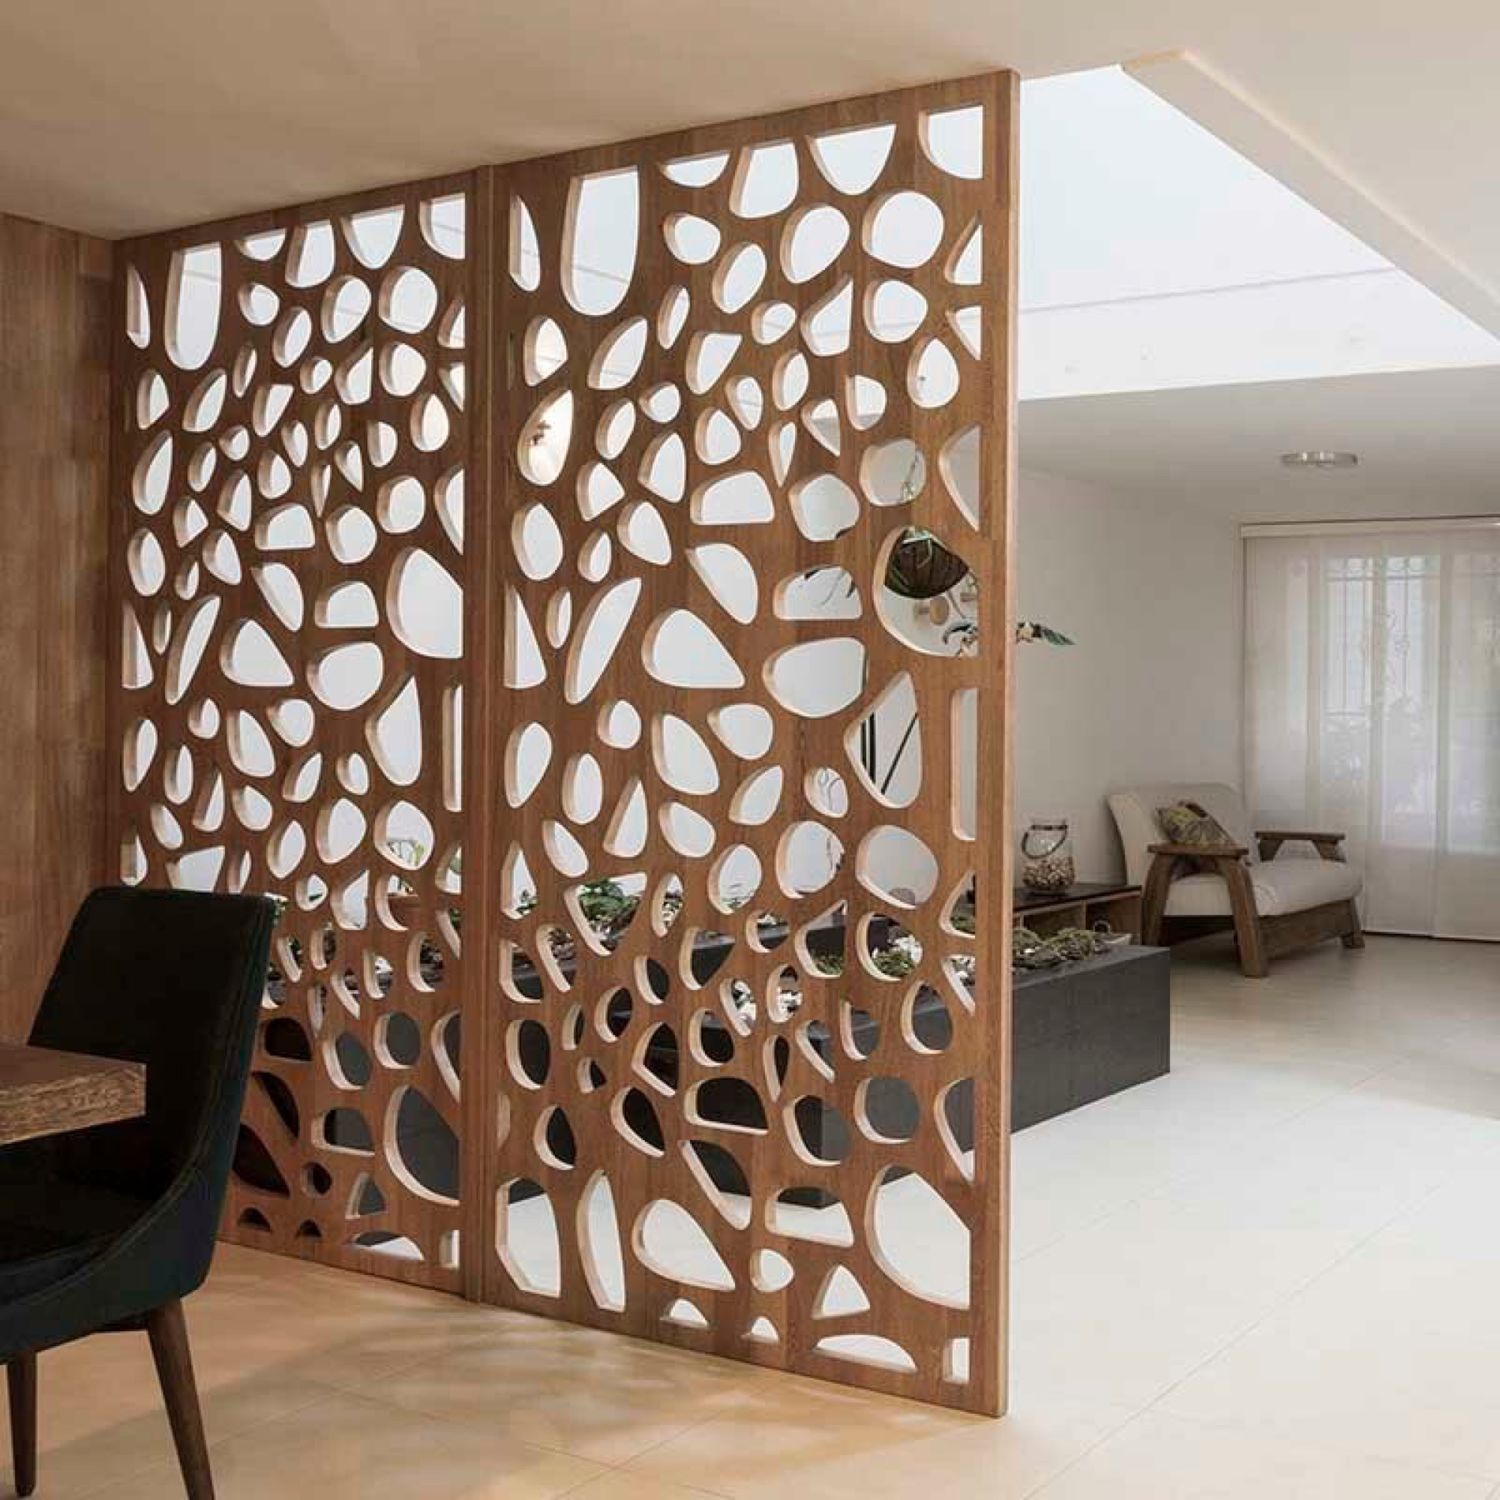 декоративная стенка из дерева в комнате